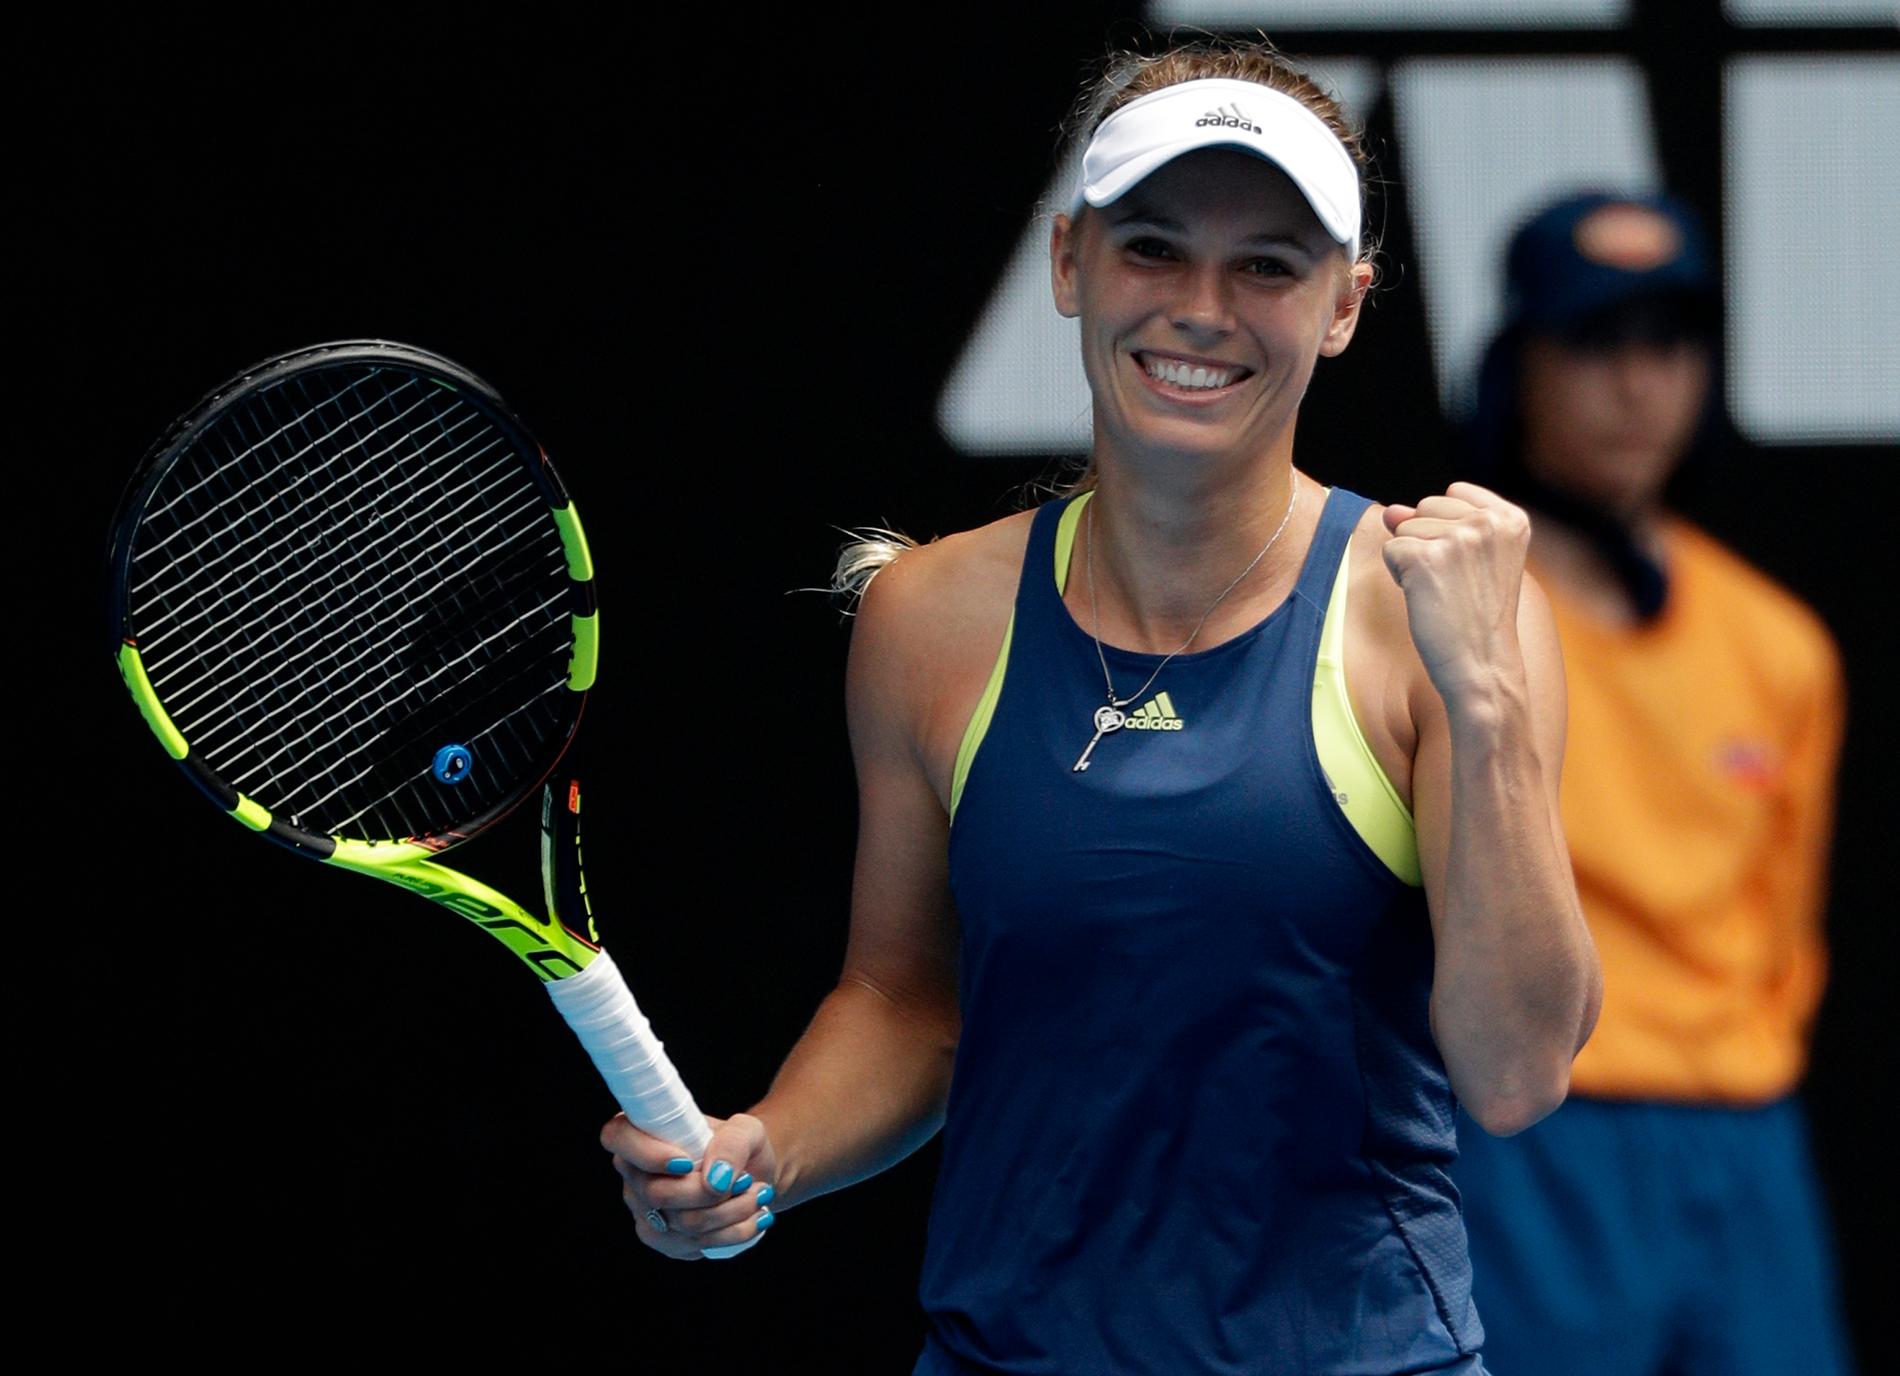 Danskan Caroline Wozniacki är glad efter segern i Melbourne.